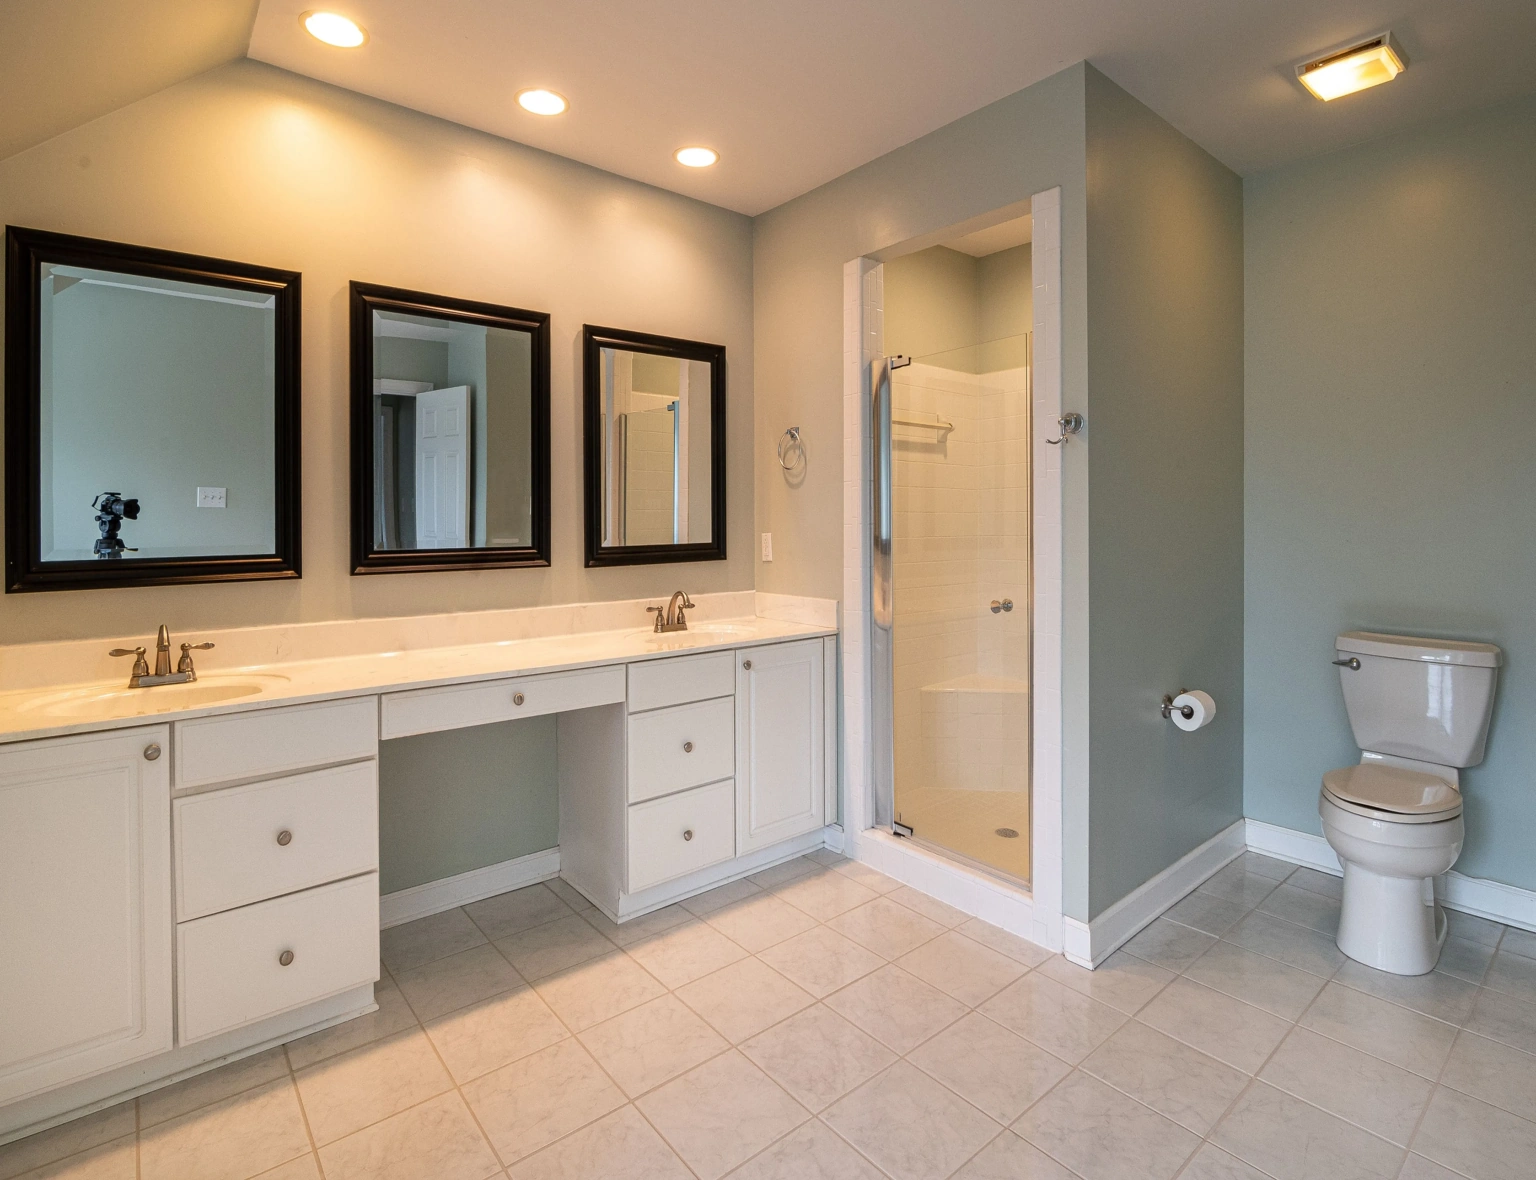 Modular bathroom with large vanity area